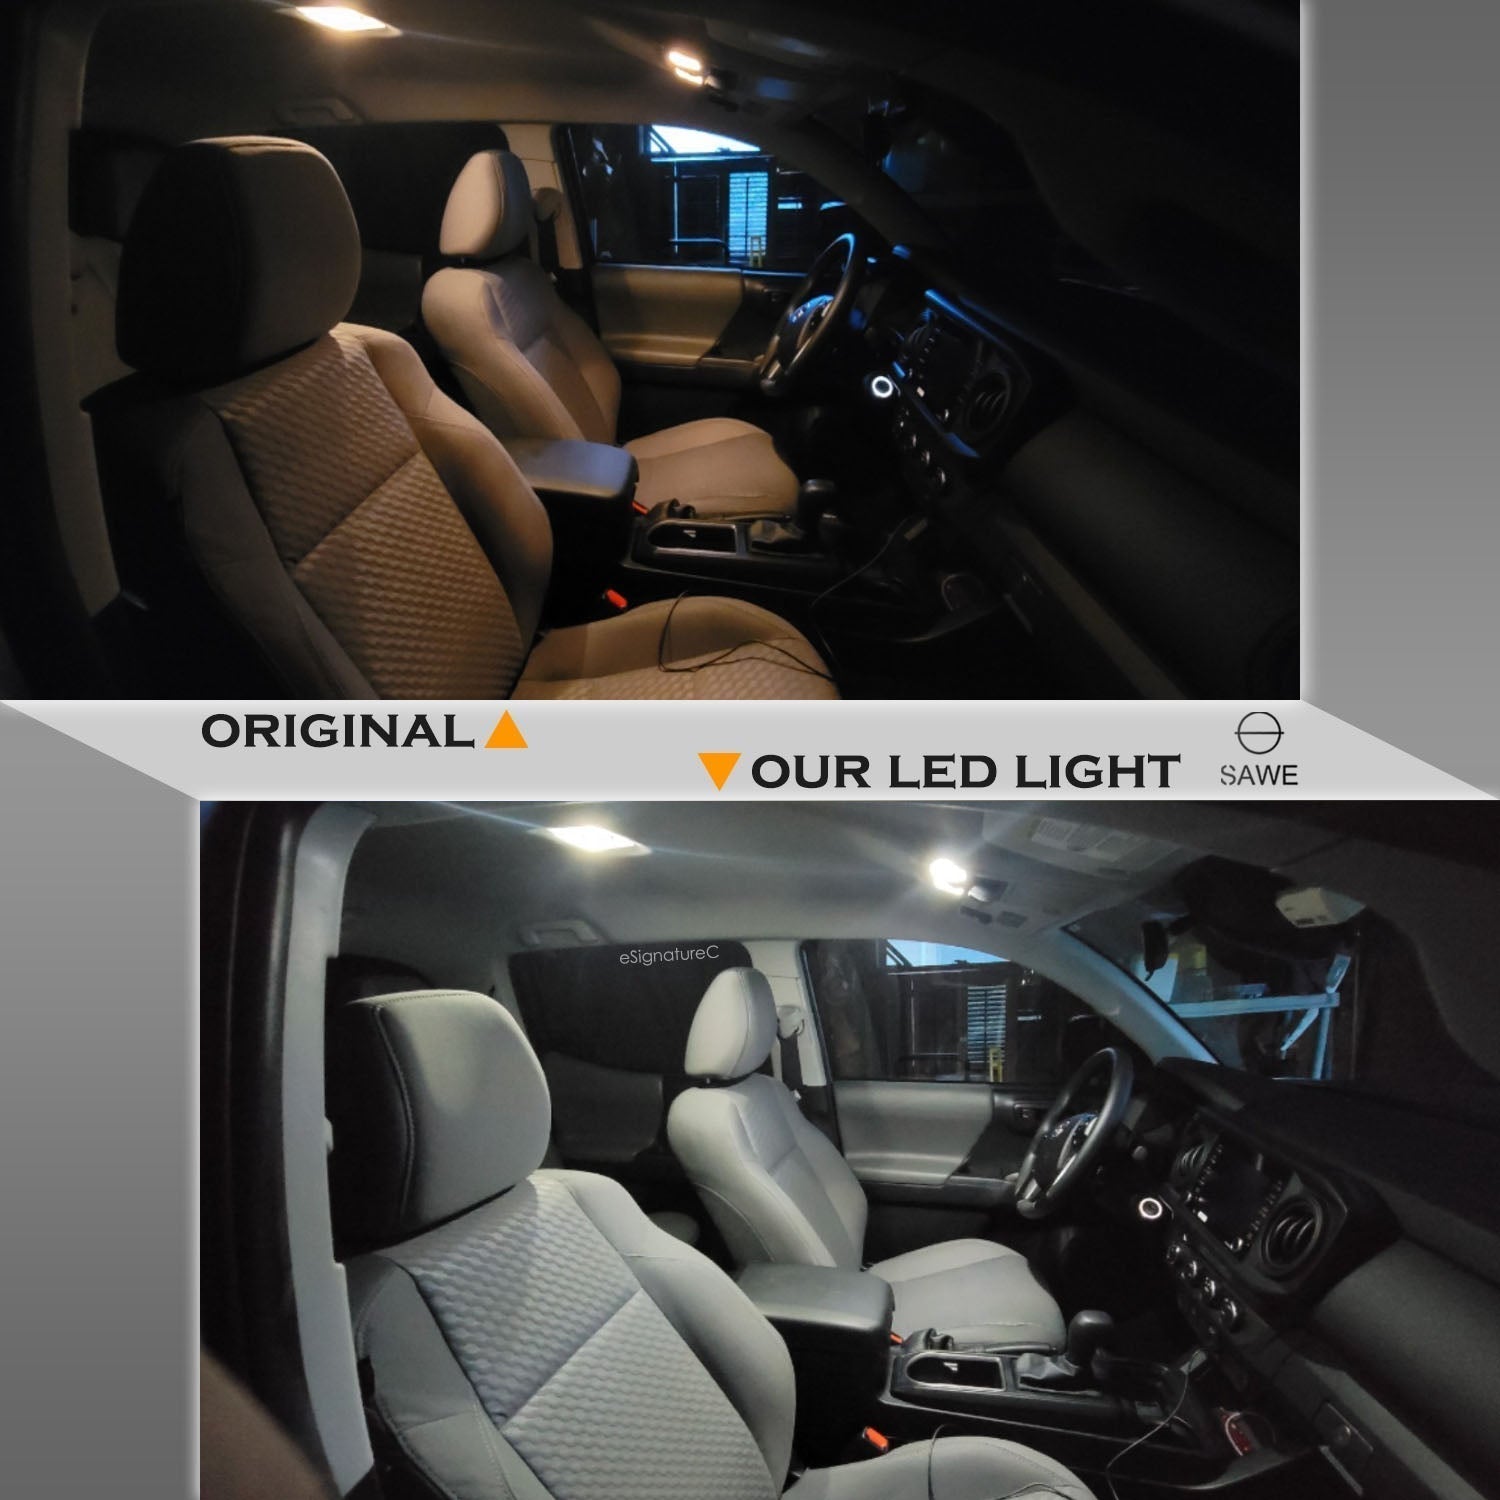 For Mercedes Benz C250 C300 Interior LED Lights - Dome & Map Light Bulb Package Kit for 2008 - 2013 - White